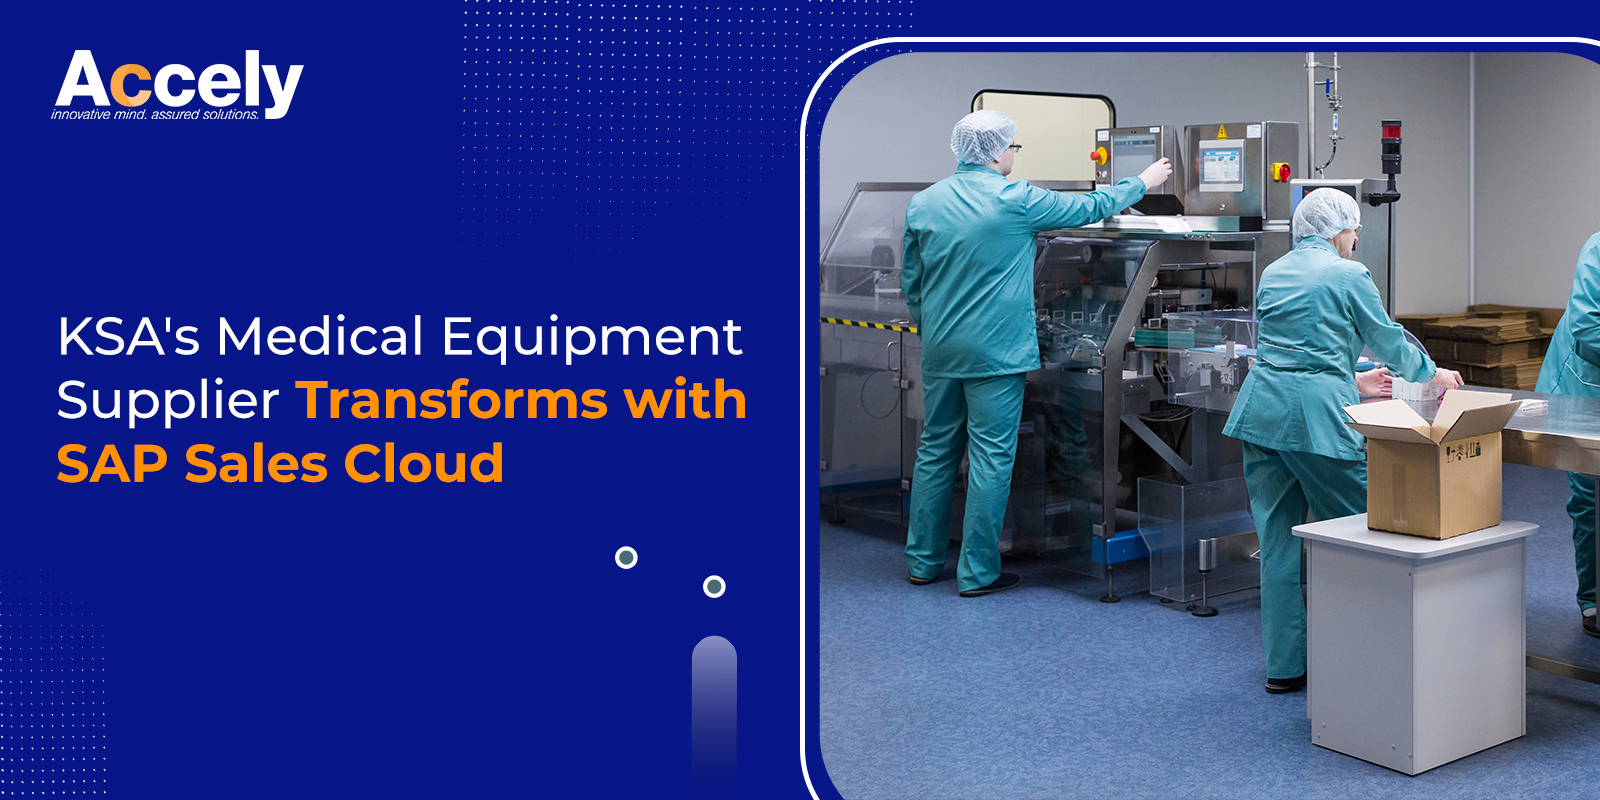 KSA's Medical Equipment Supplier Transforms with SAP Sales Cloud